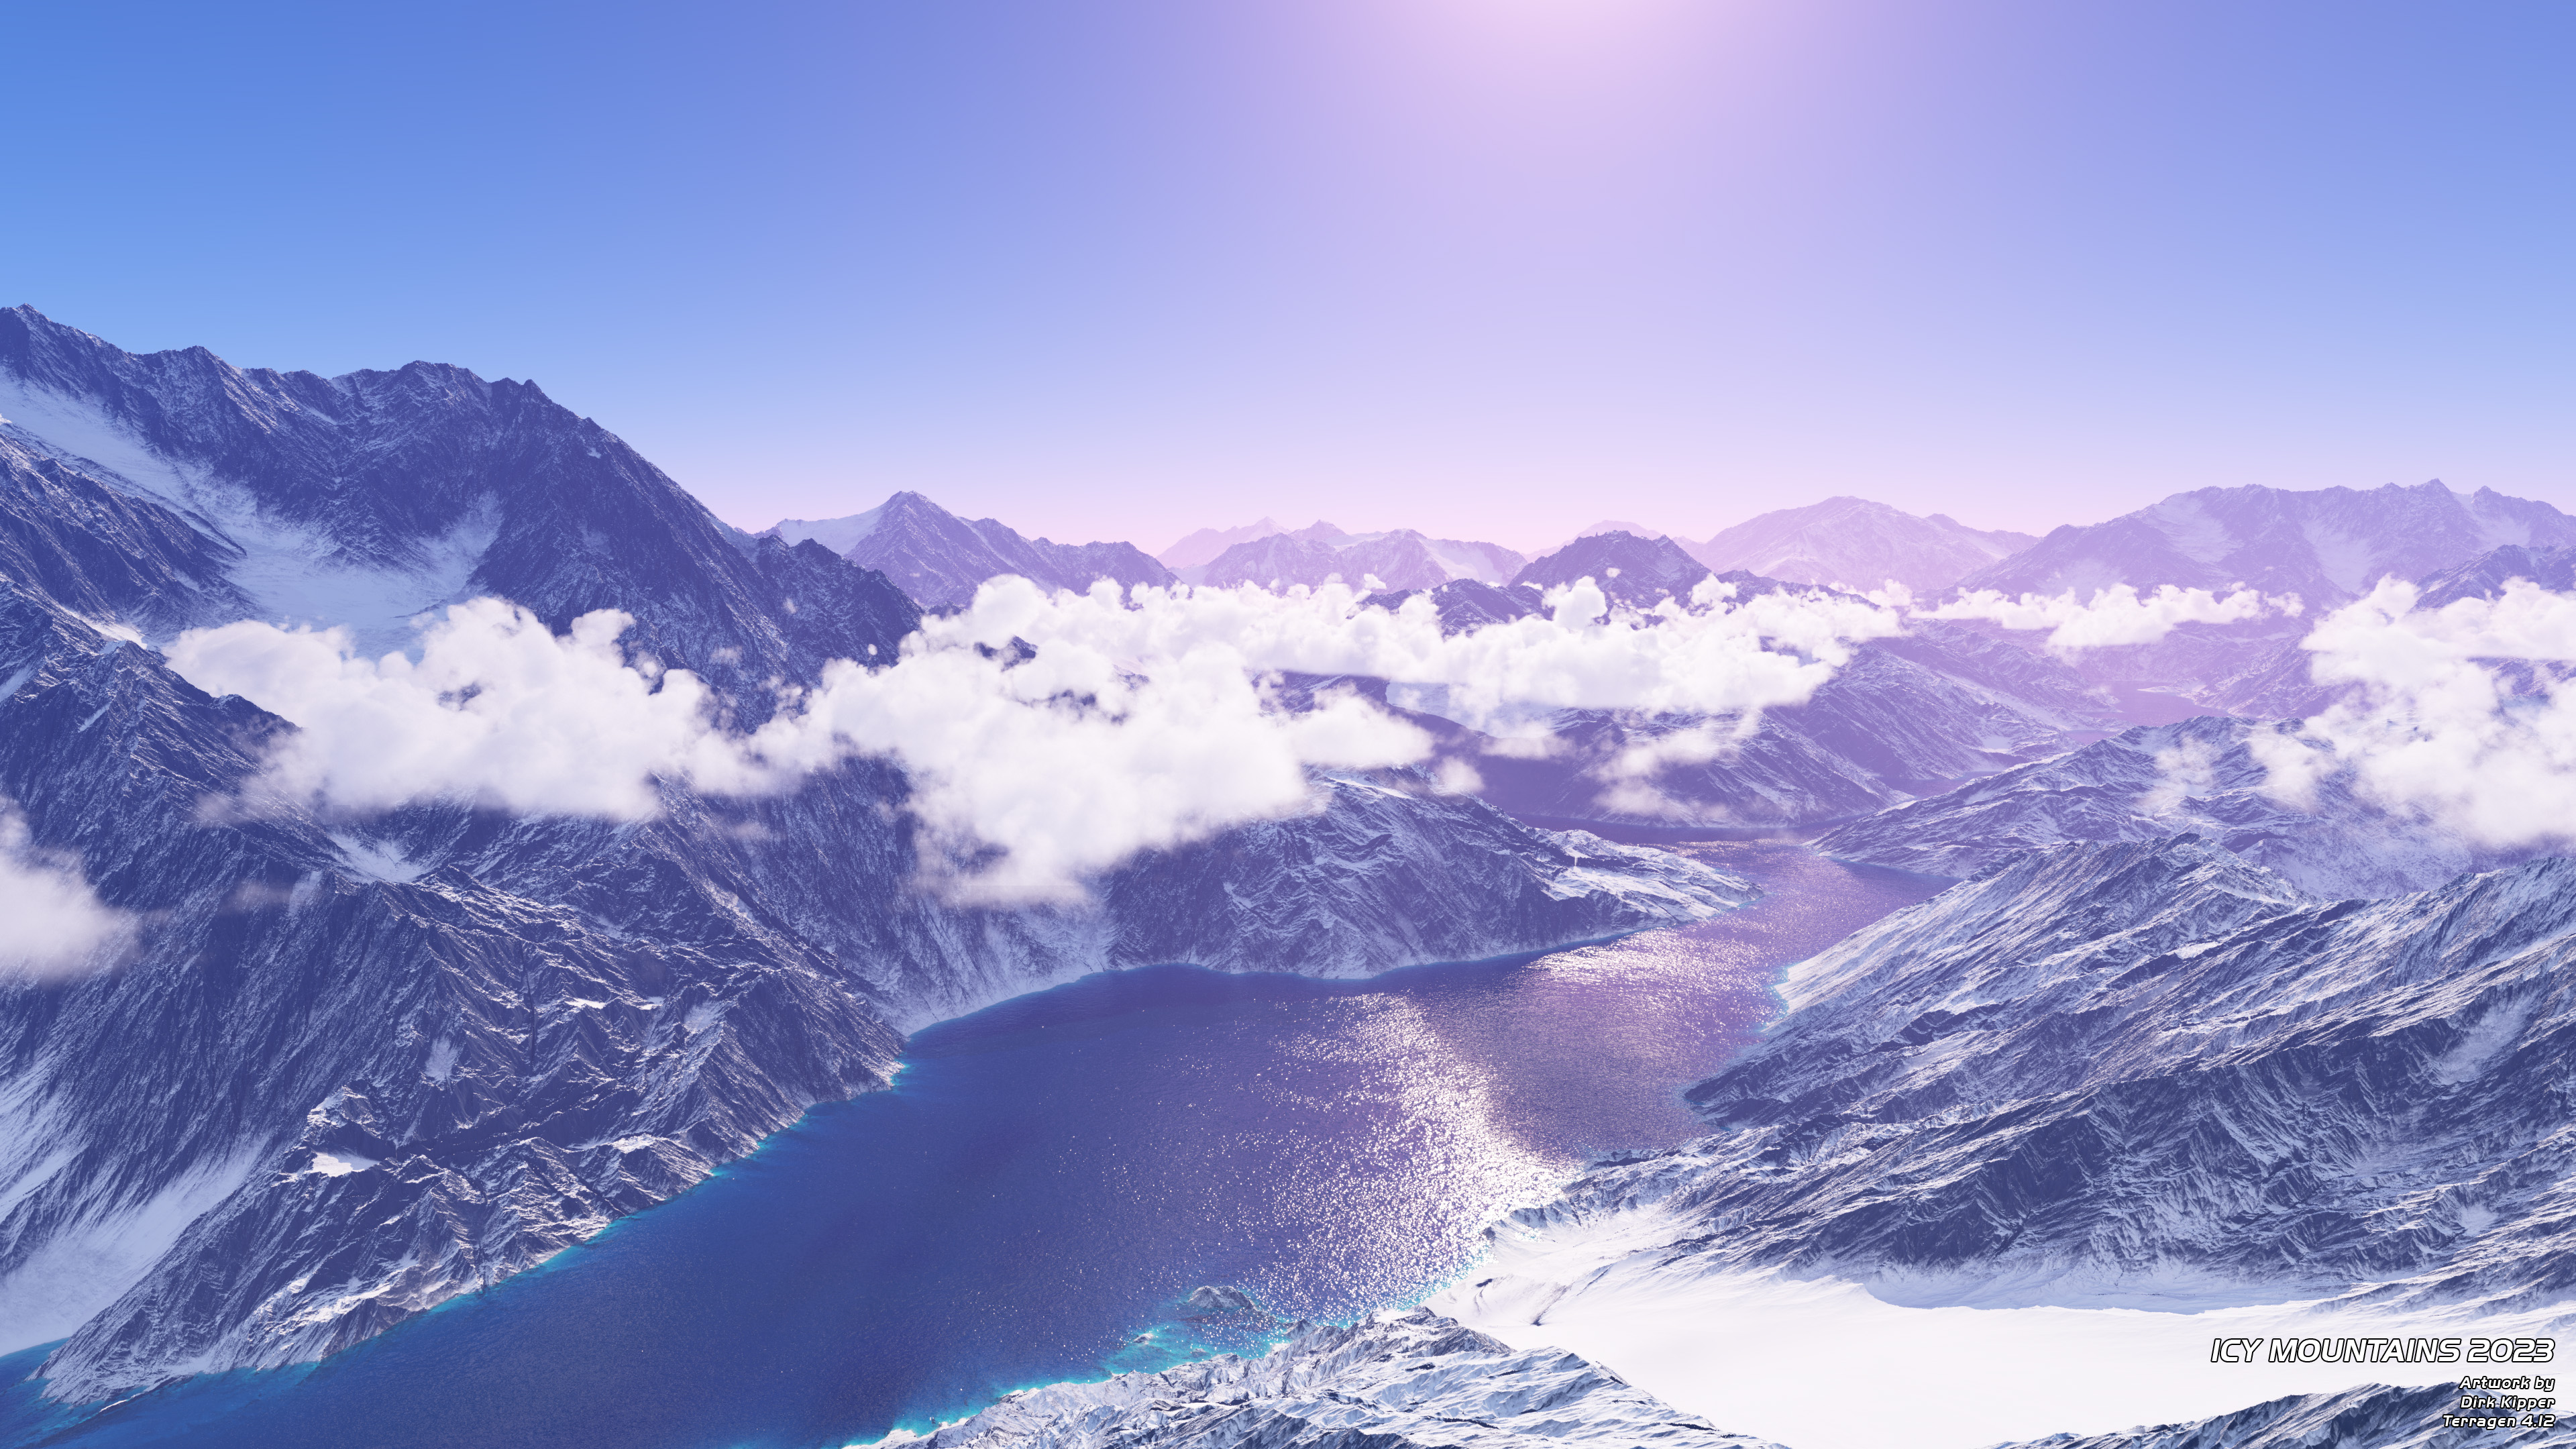 Icy Mountain 2023 (Purple).jpg